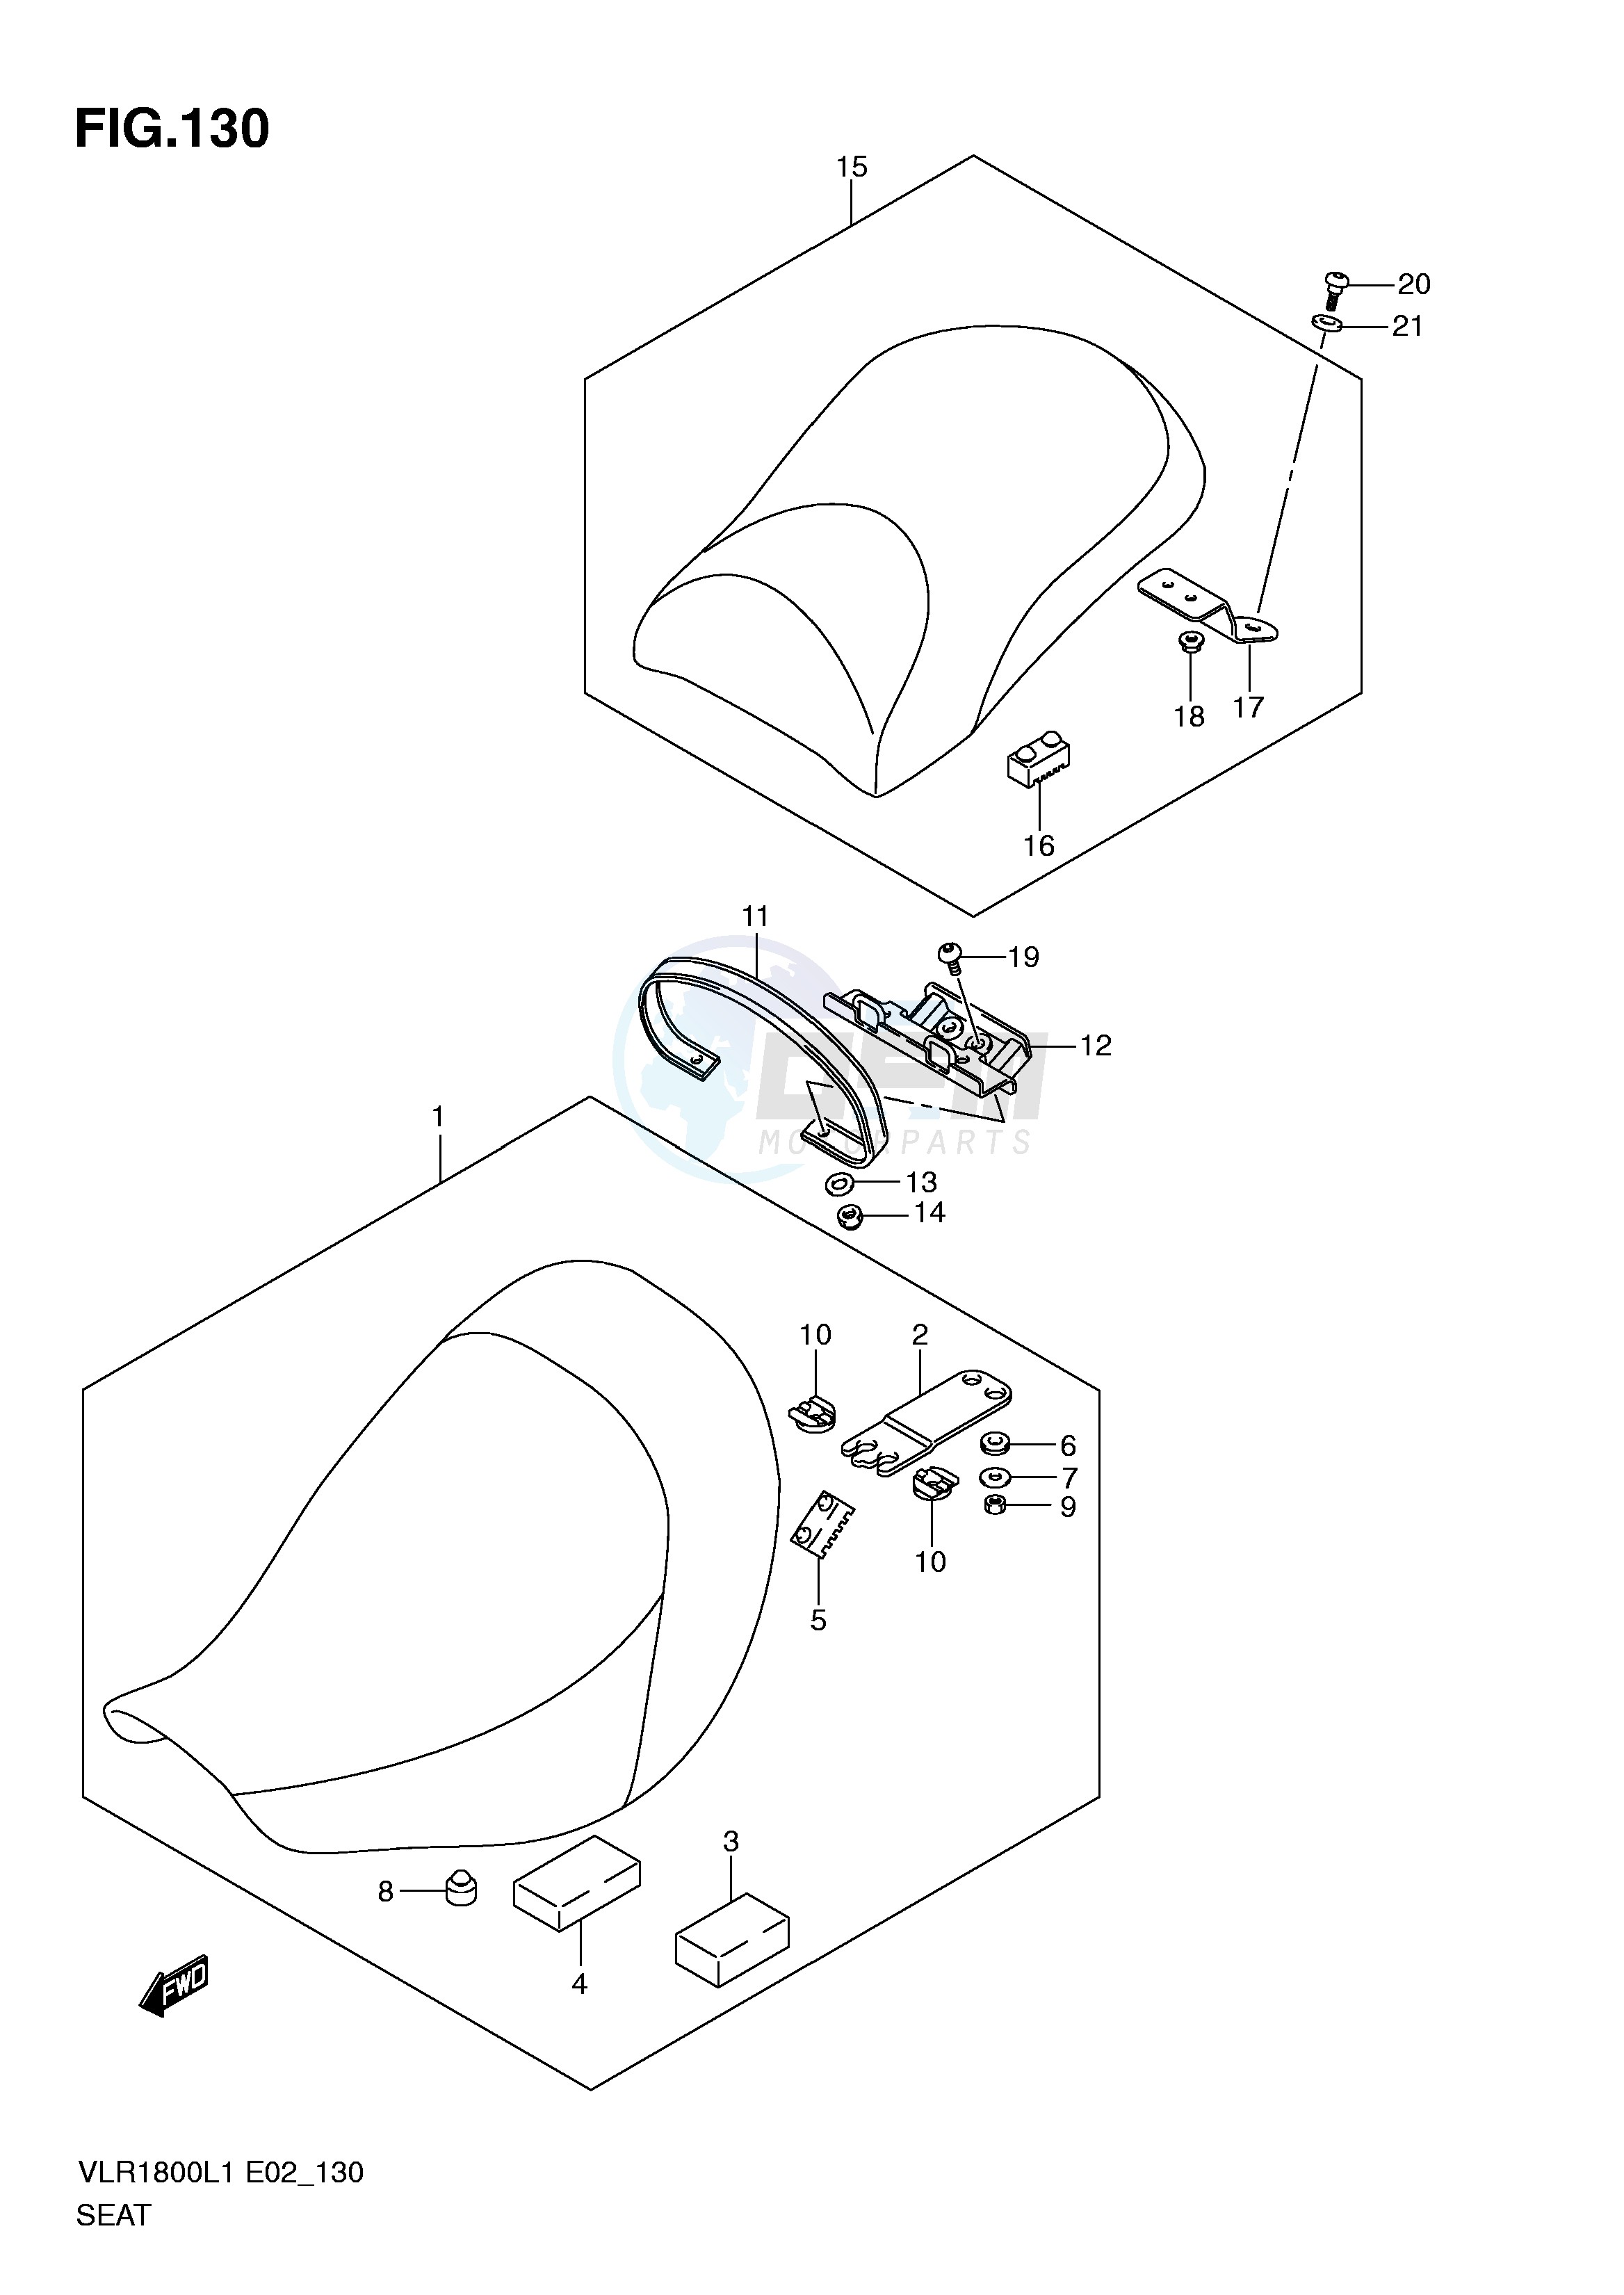 SEAT (VLR1800TL1 E24) blueprint